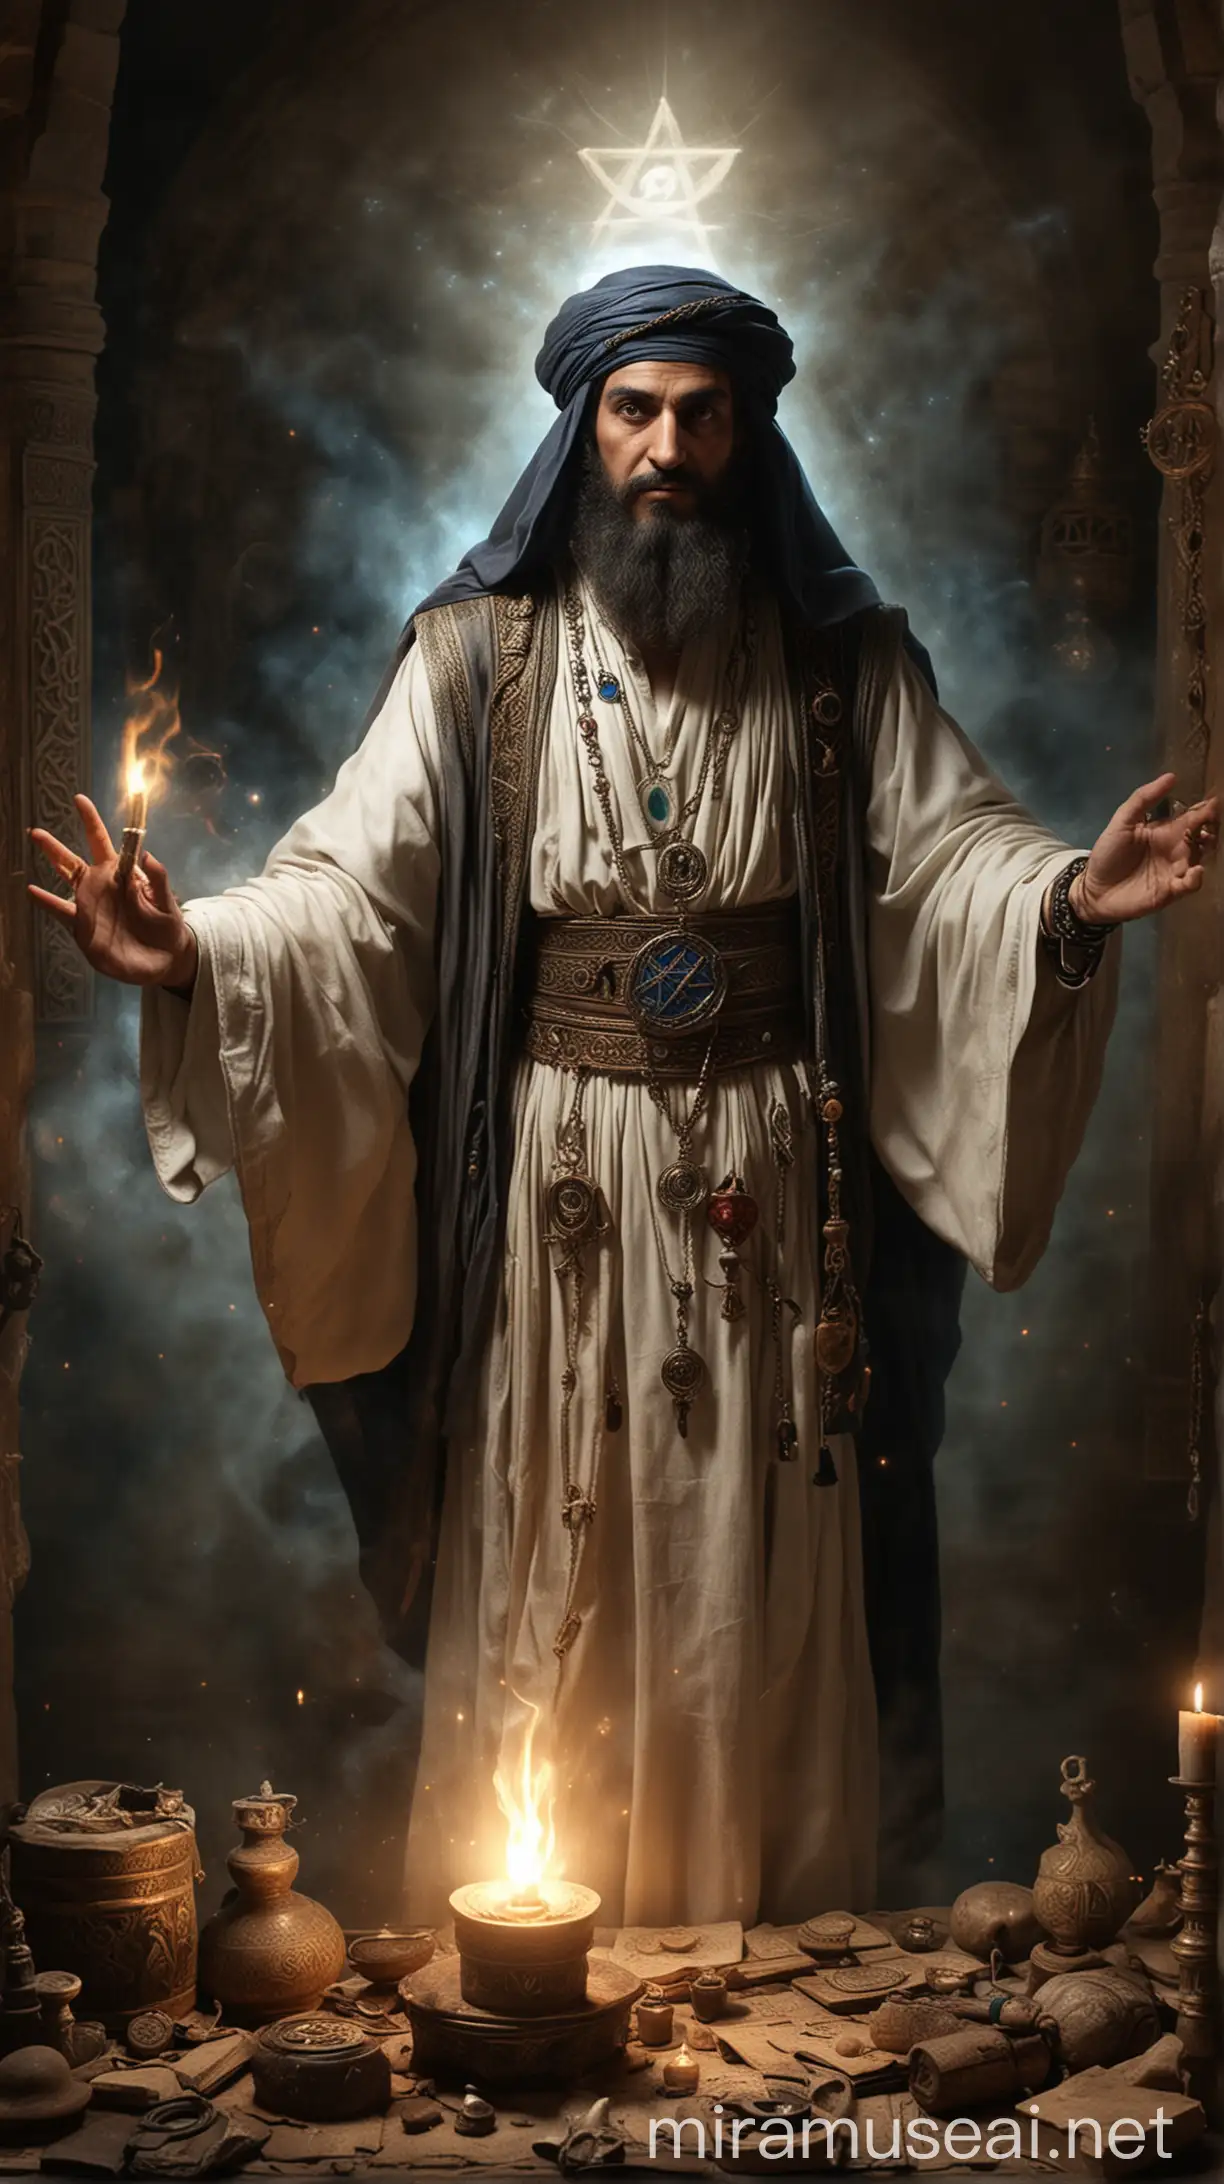 Labid ibn alAsam the Jewish Sorcerer Performing Mysterious Incantations